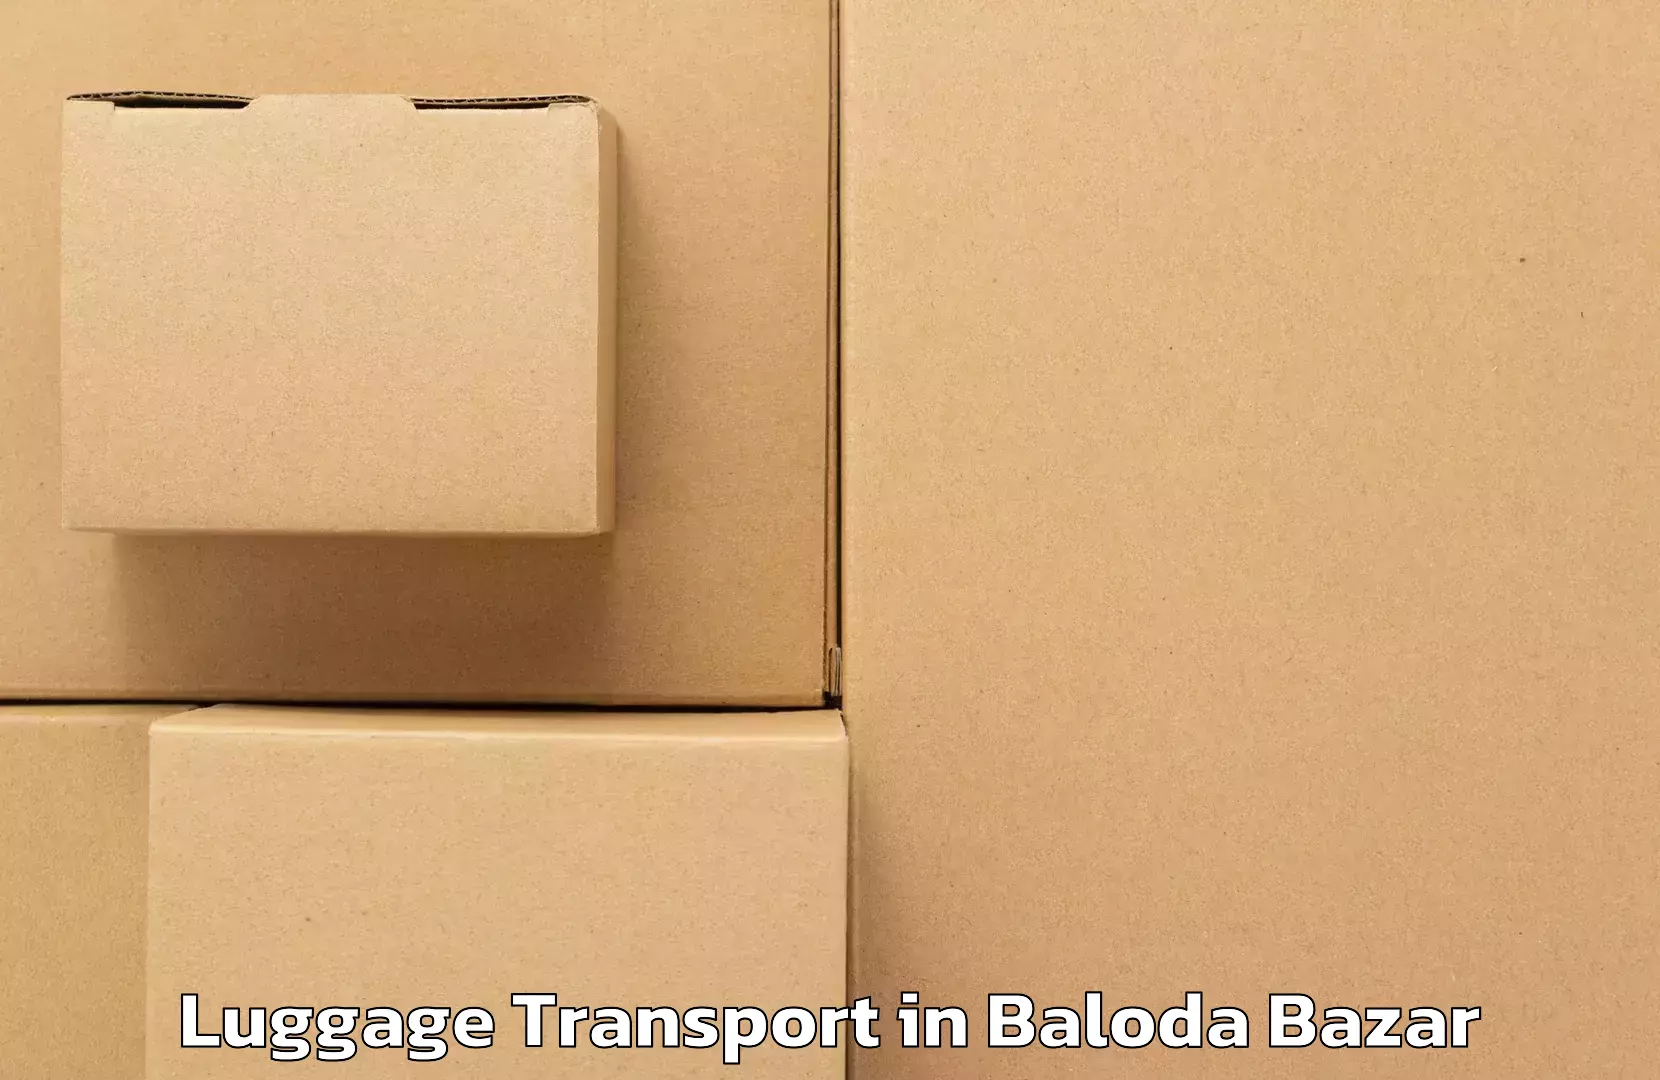 Business luggage transport in Baloda Bazar